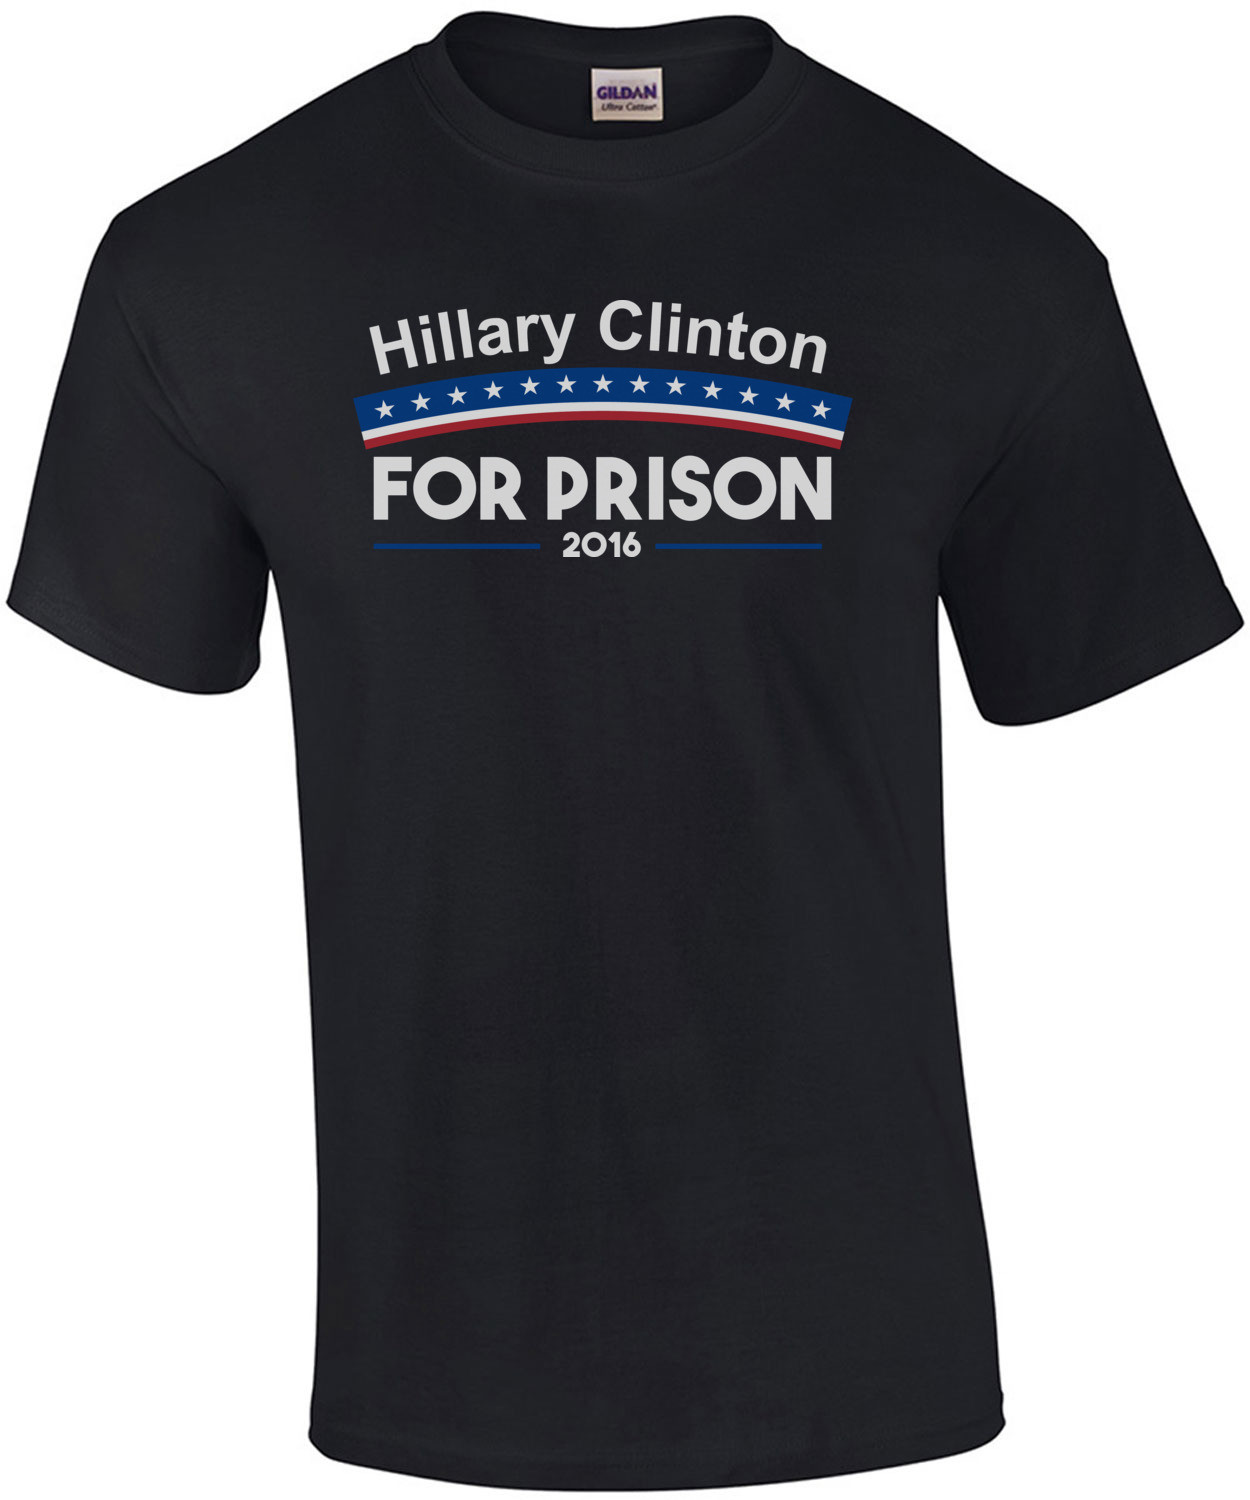 Hillary Clinton For Prison 2016 Anti-Hillary T-Shirt